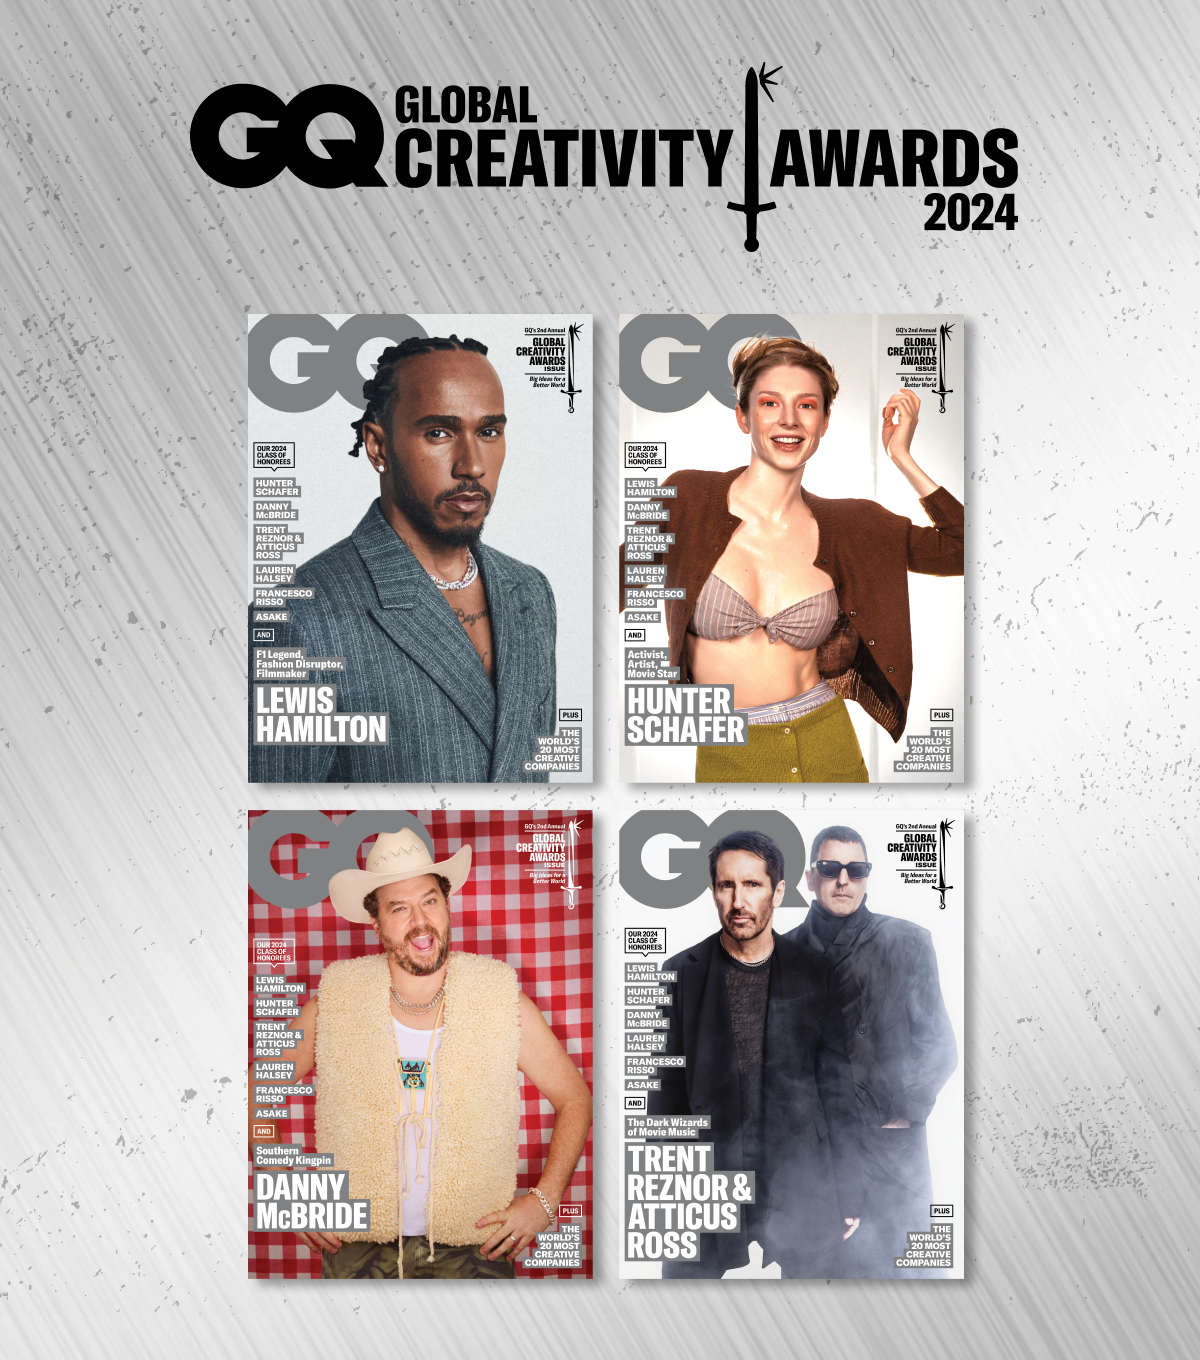 Global Creativity Awards 2024 with cover star Lewis Hamilton.